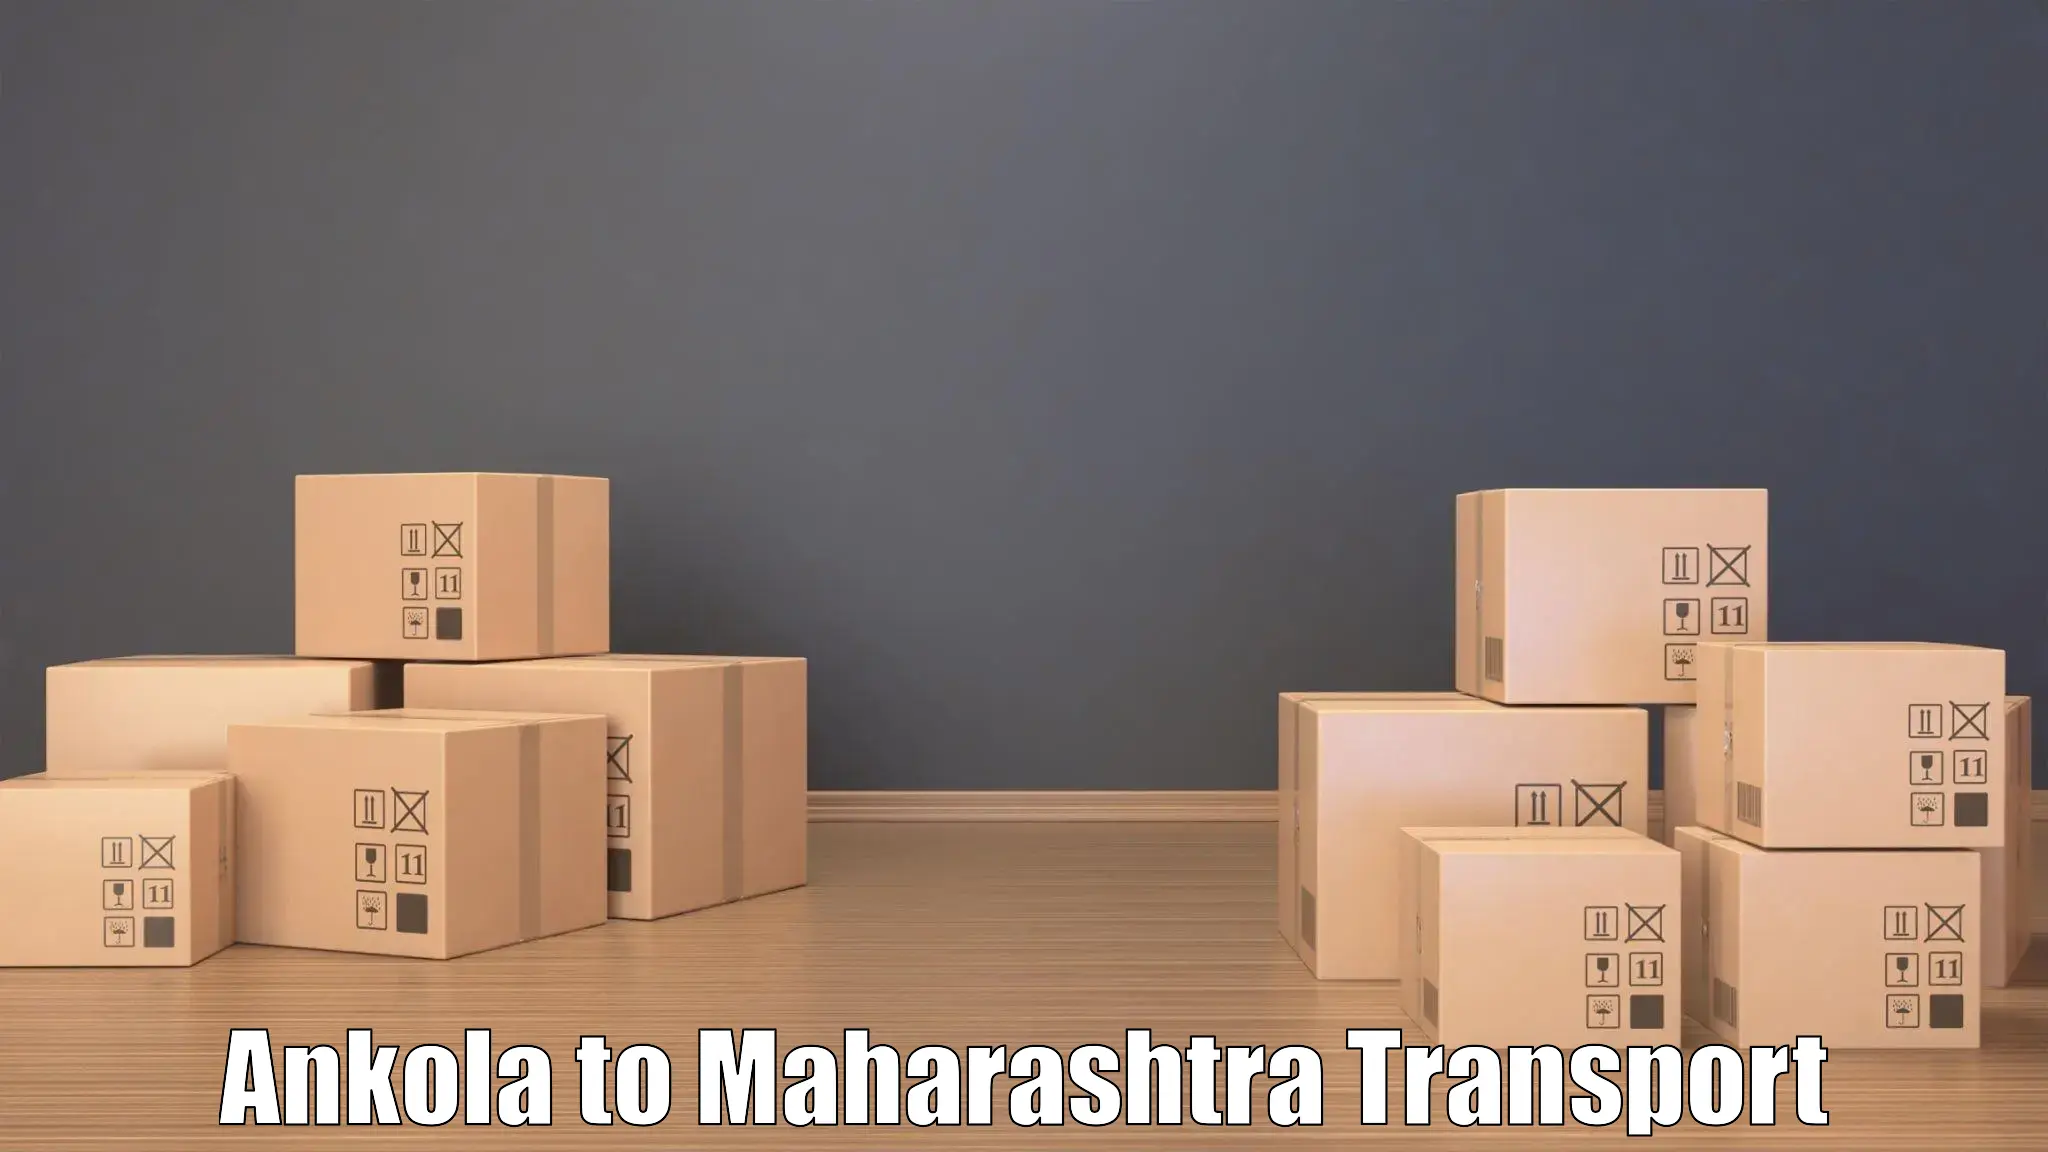 Truck transport companies in India in Ankola to Brahmapuri